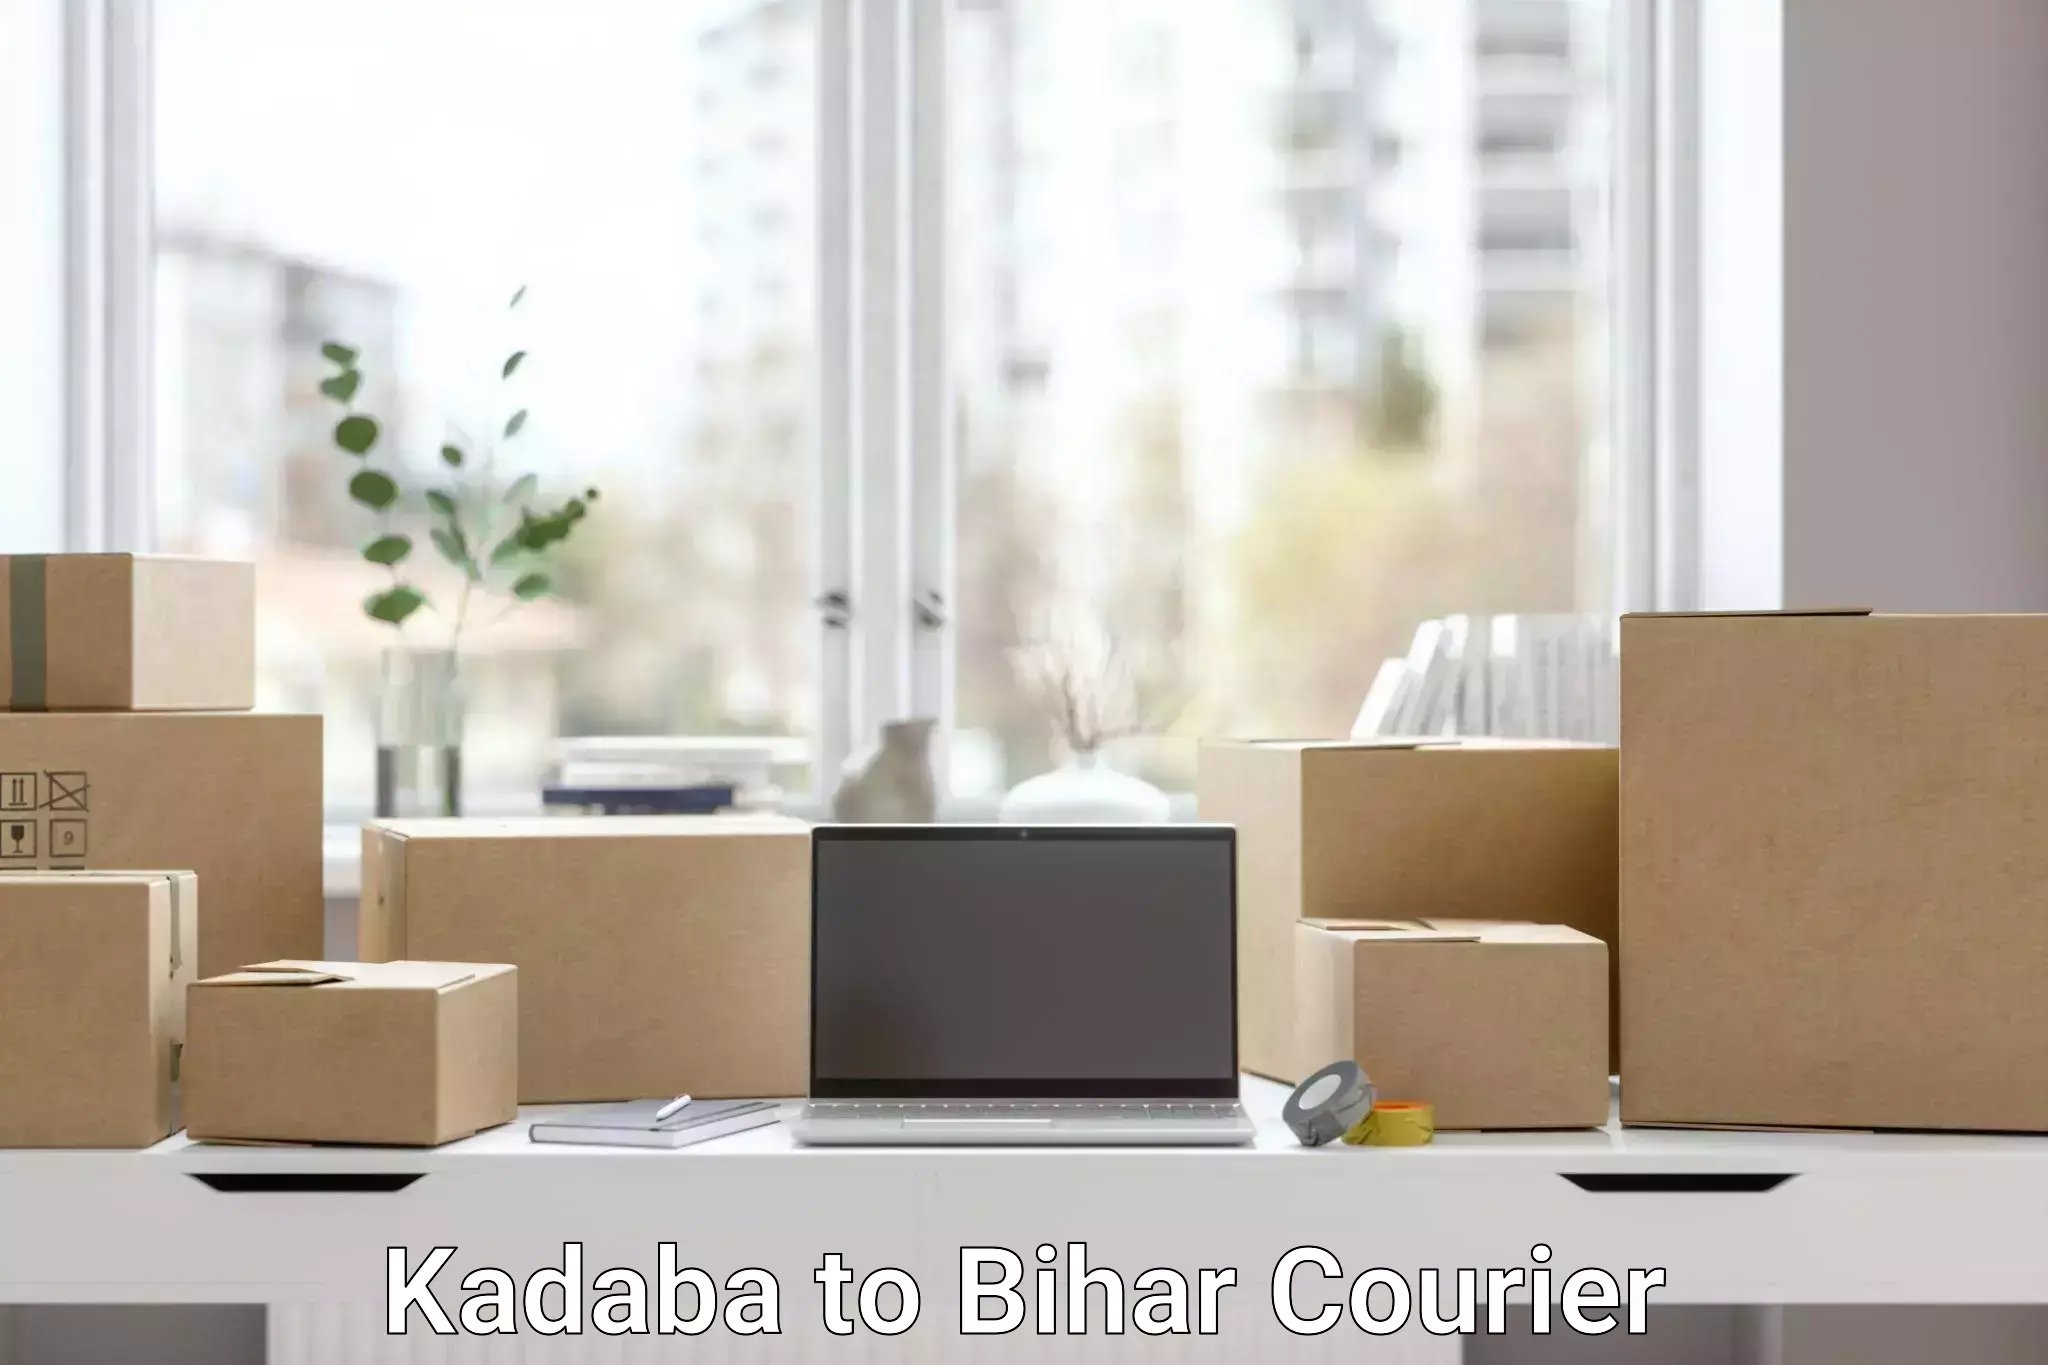 International courier networks Kadaba to Barhiya